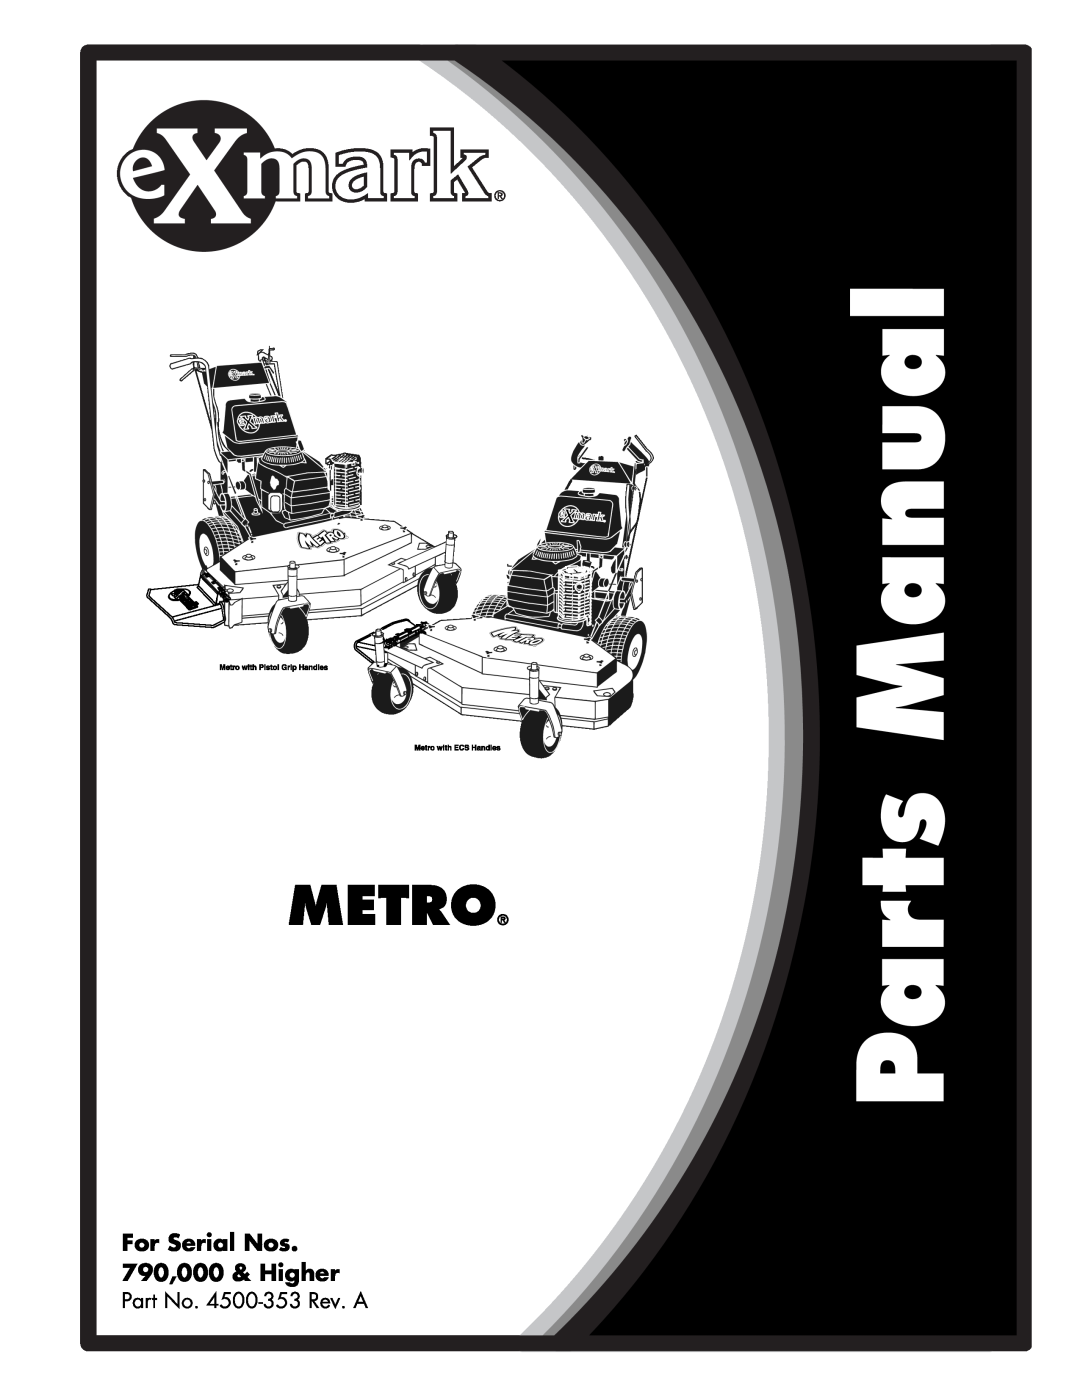 Exmark manual Metro, For Serial Nos 790,000 & Higher, Part No. 4500-353Rev. A 